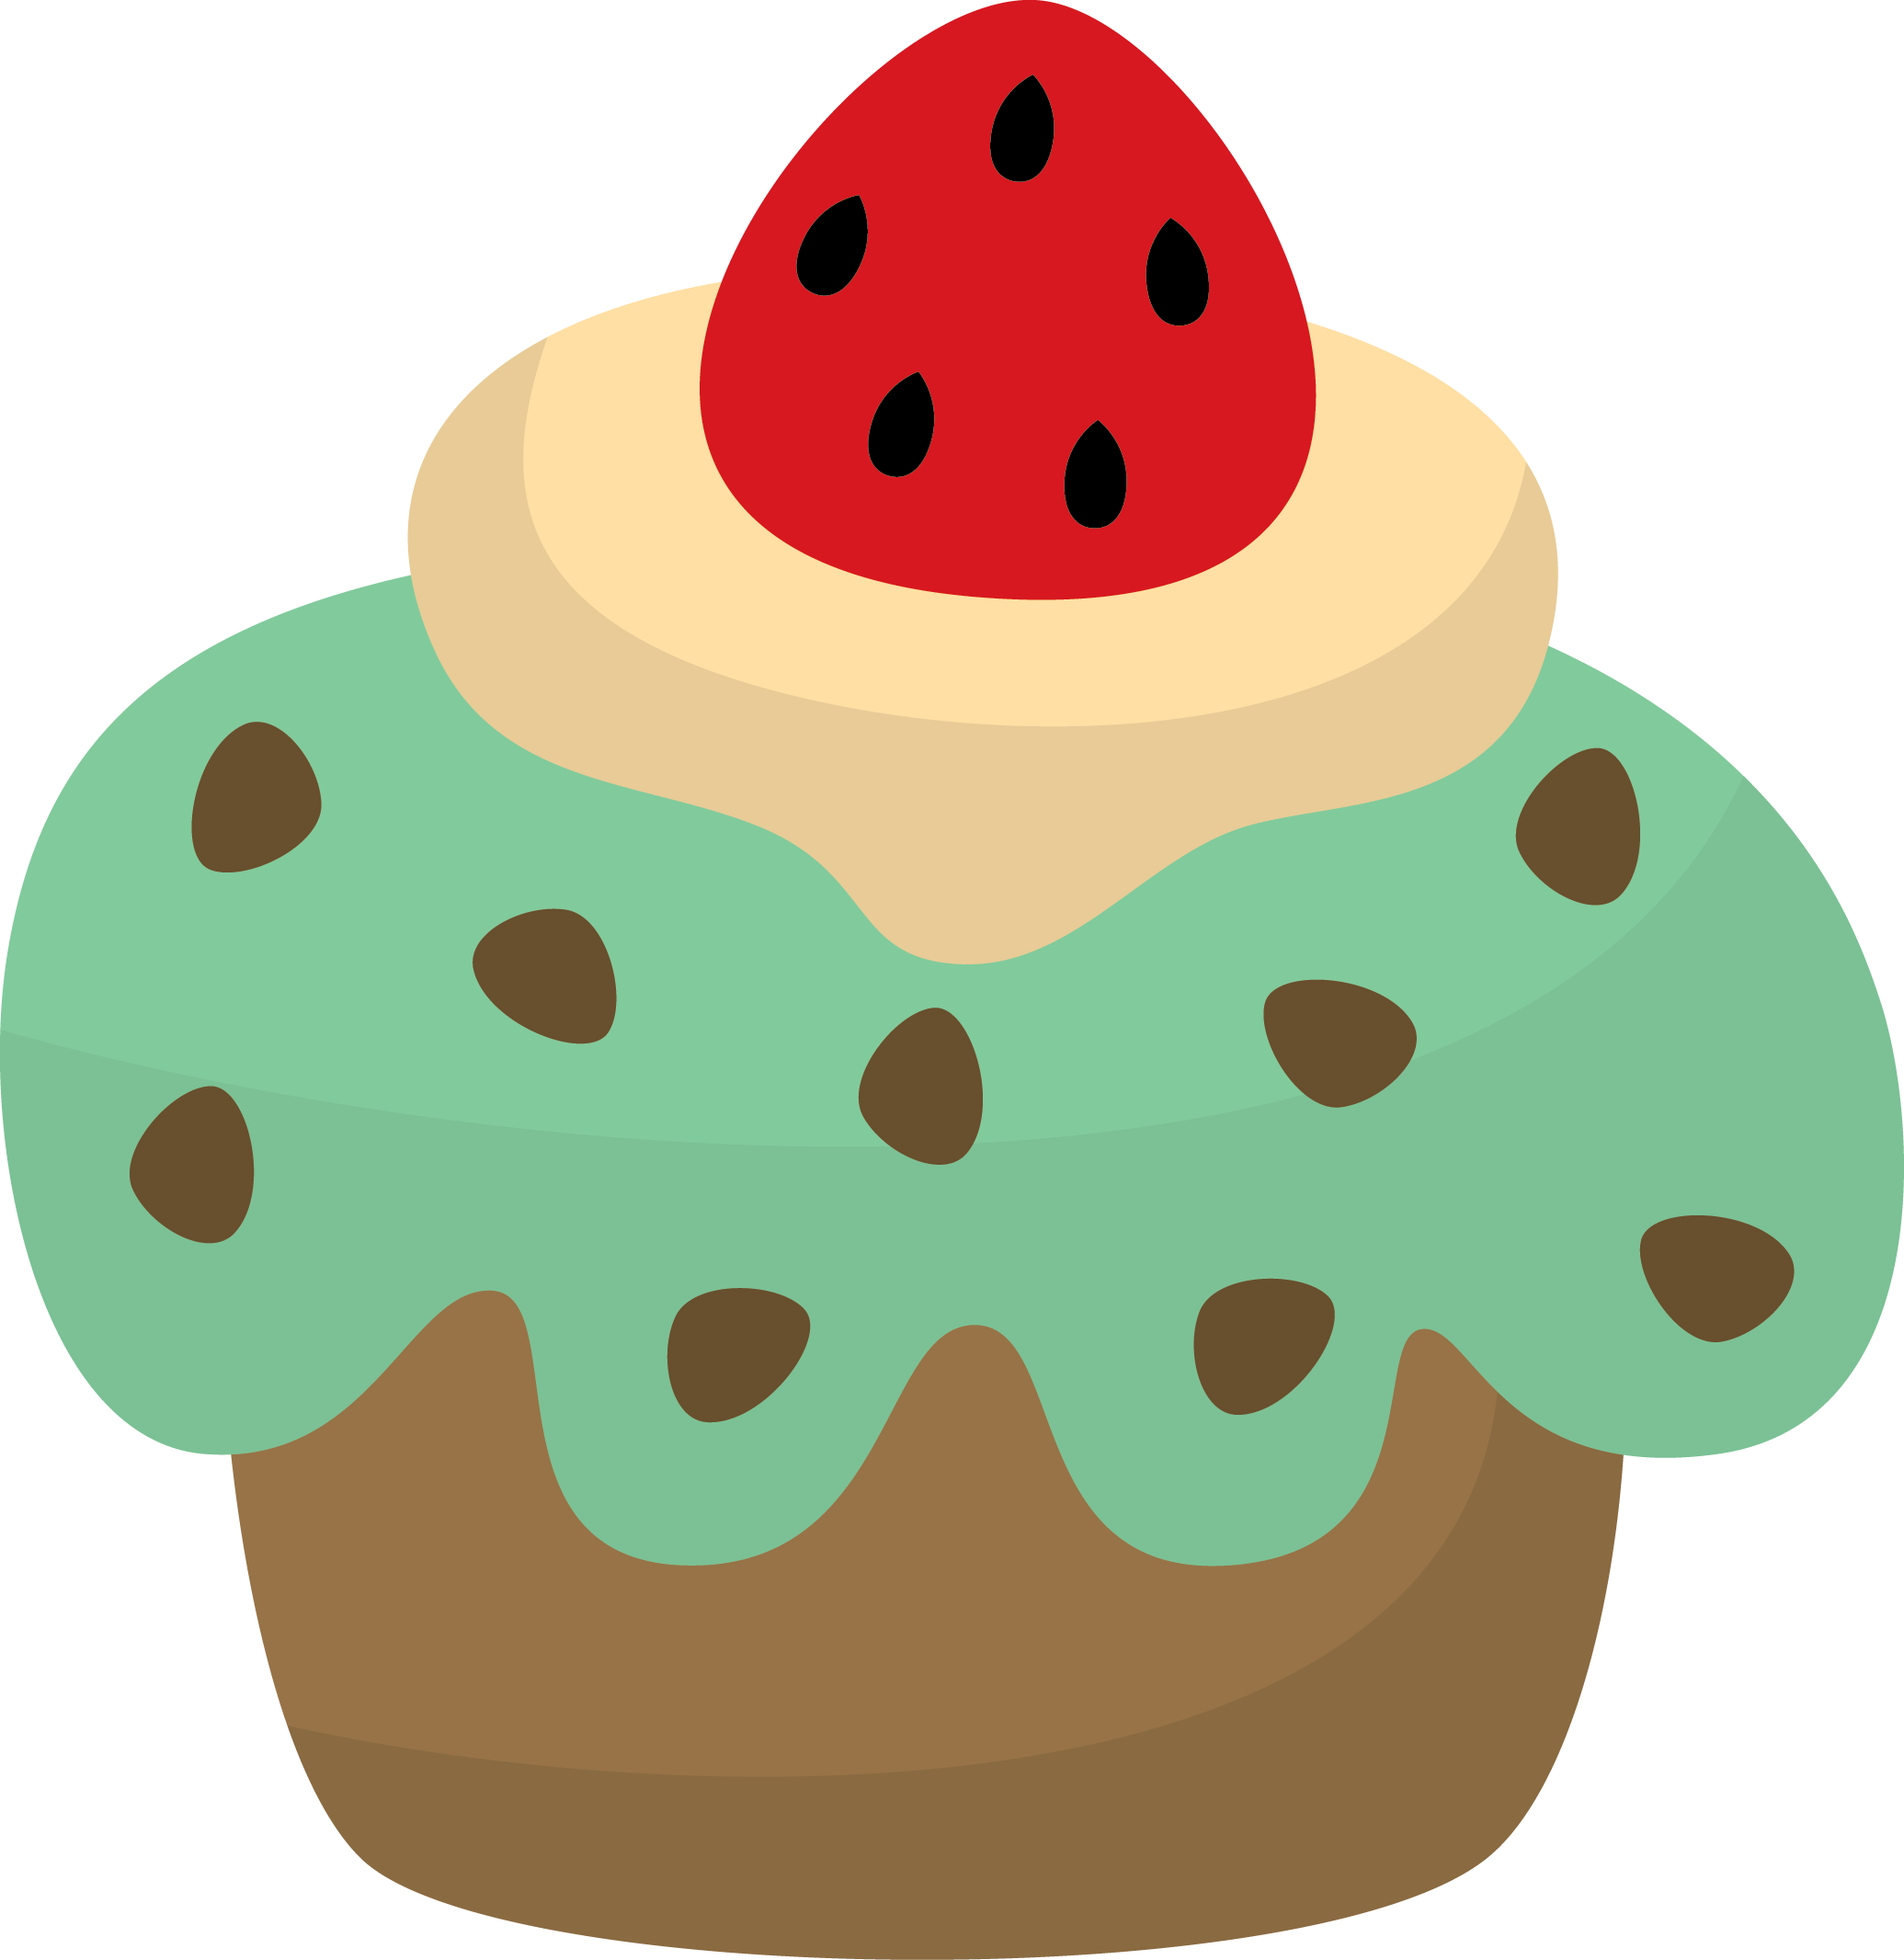 Strawberry Cream Cake Rainbow Cookie Fruit - Strawberry Cream Cake Rainbow Cookie Fruit (2071x2132)